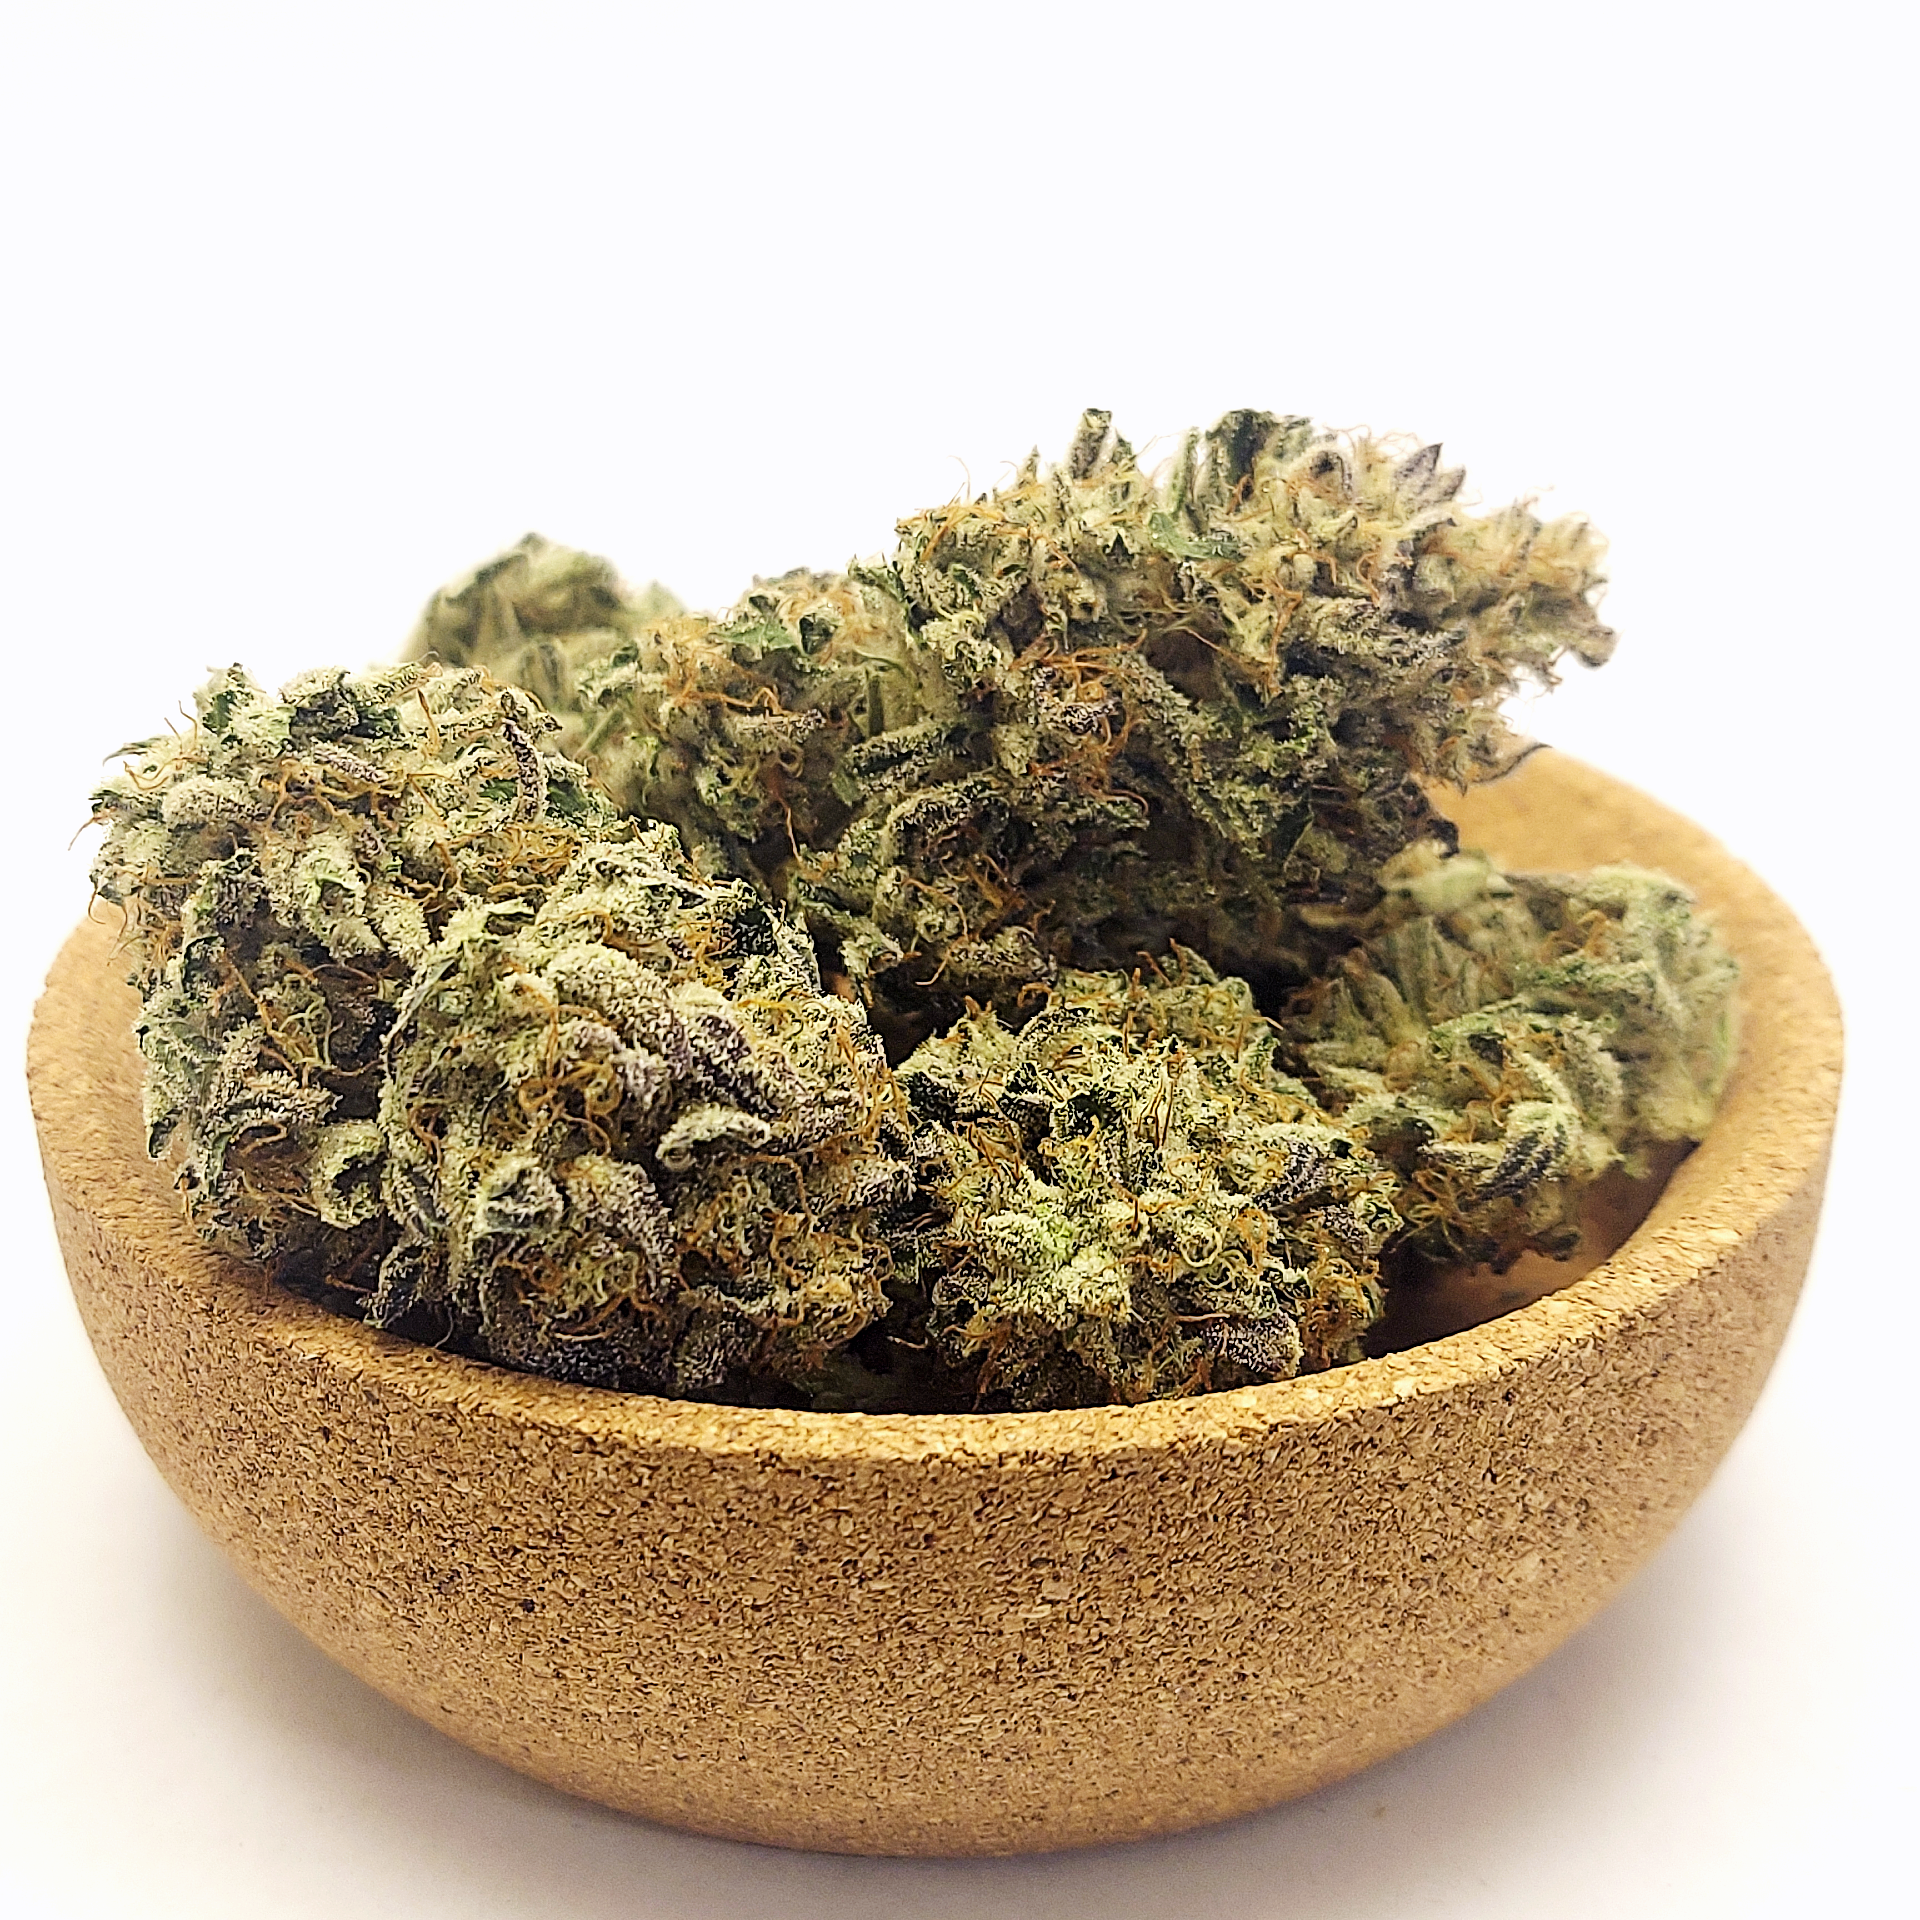 A closeup photo of cannabis buds of the strain Kush Cake, grown by Lukas Greene. Photo credit: Lukas Greene